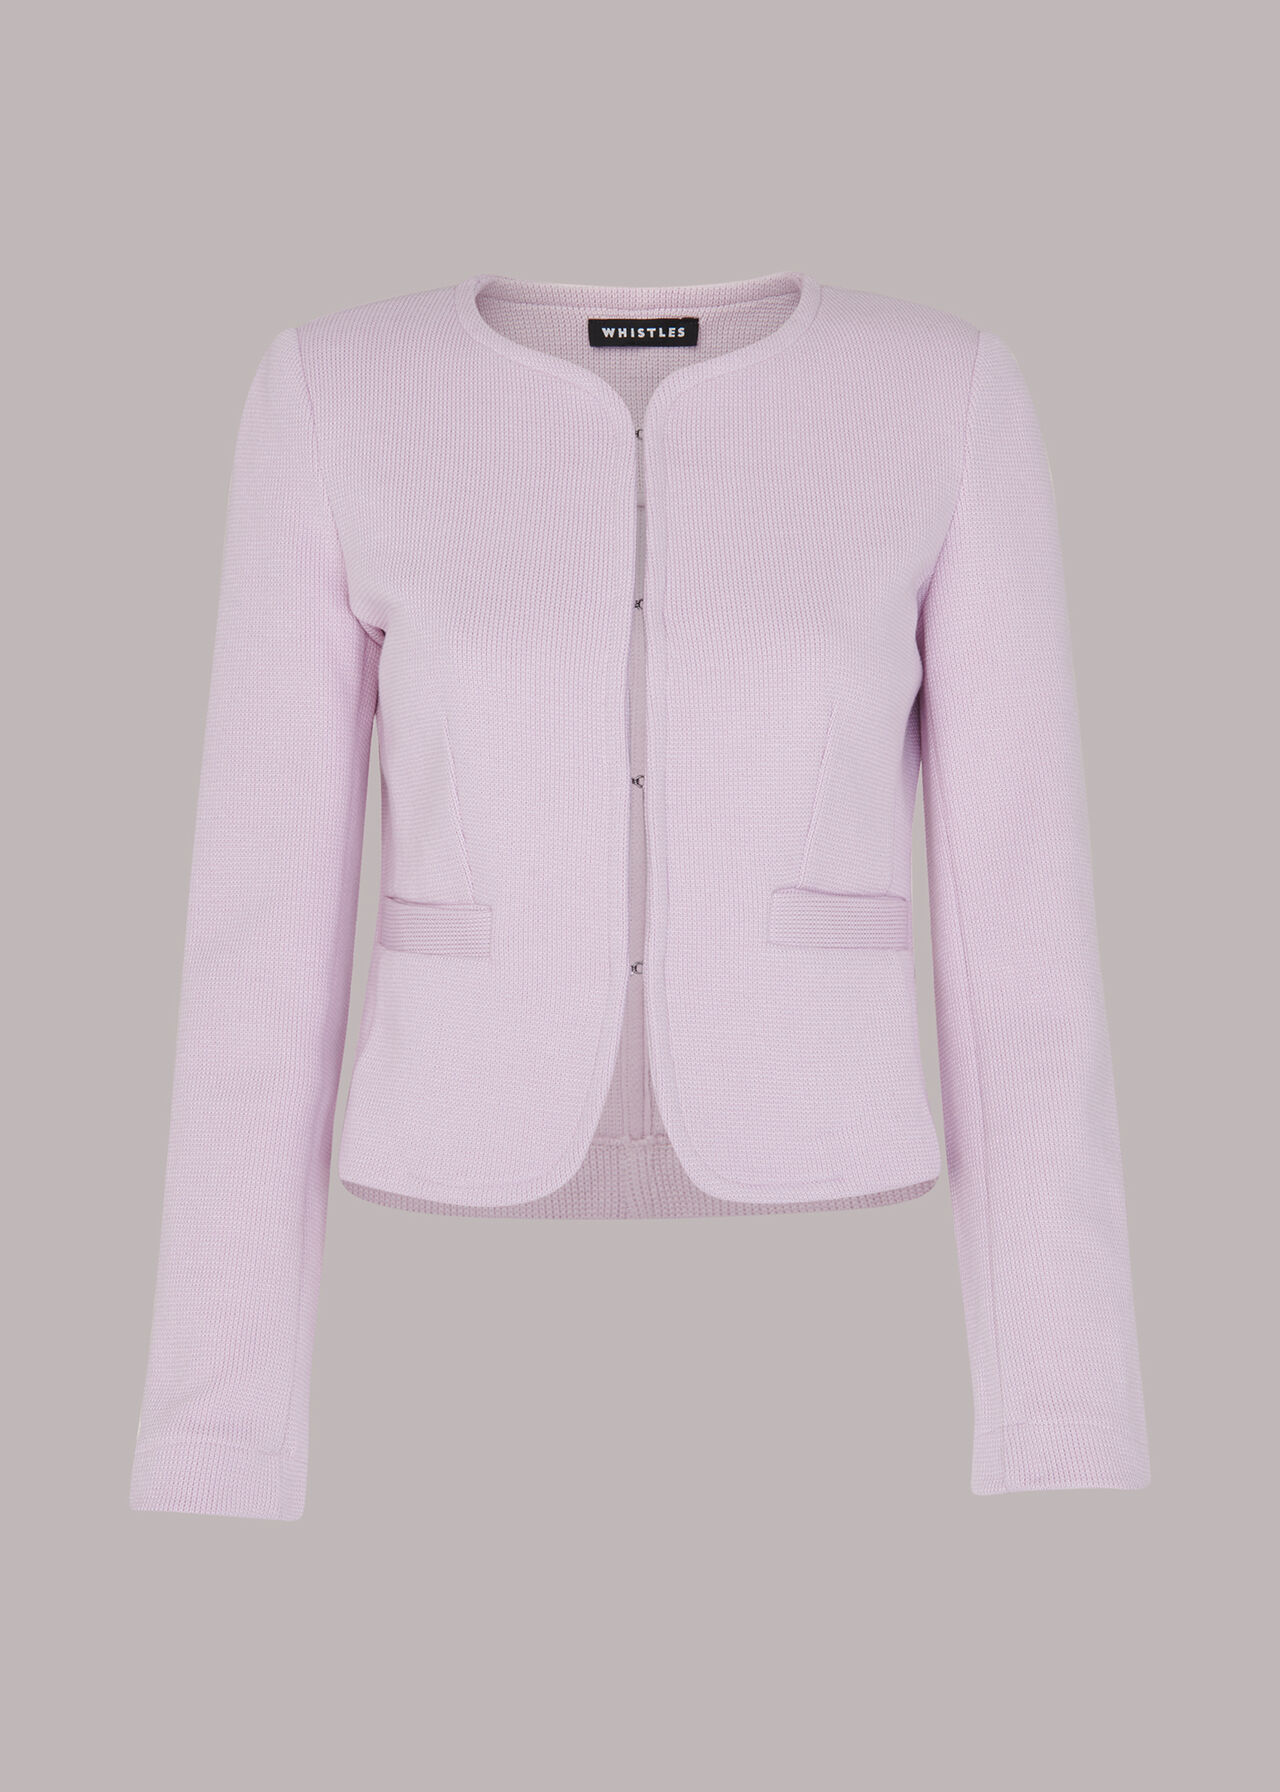 Lilac Collarless Jersey Jacket | WHISTLES